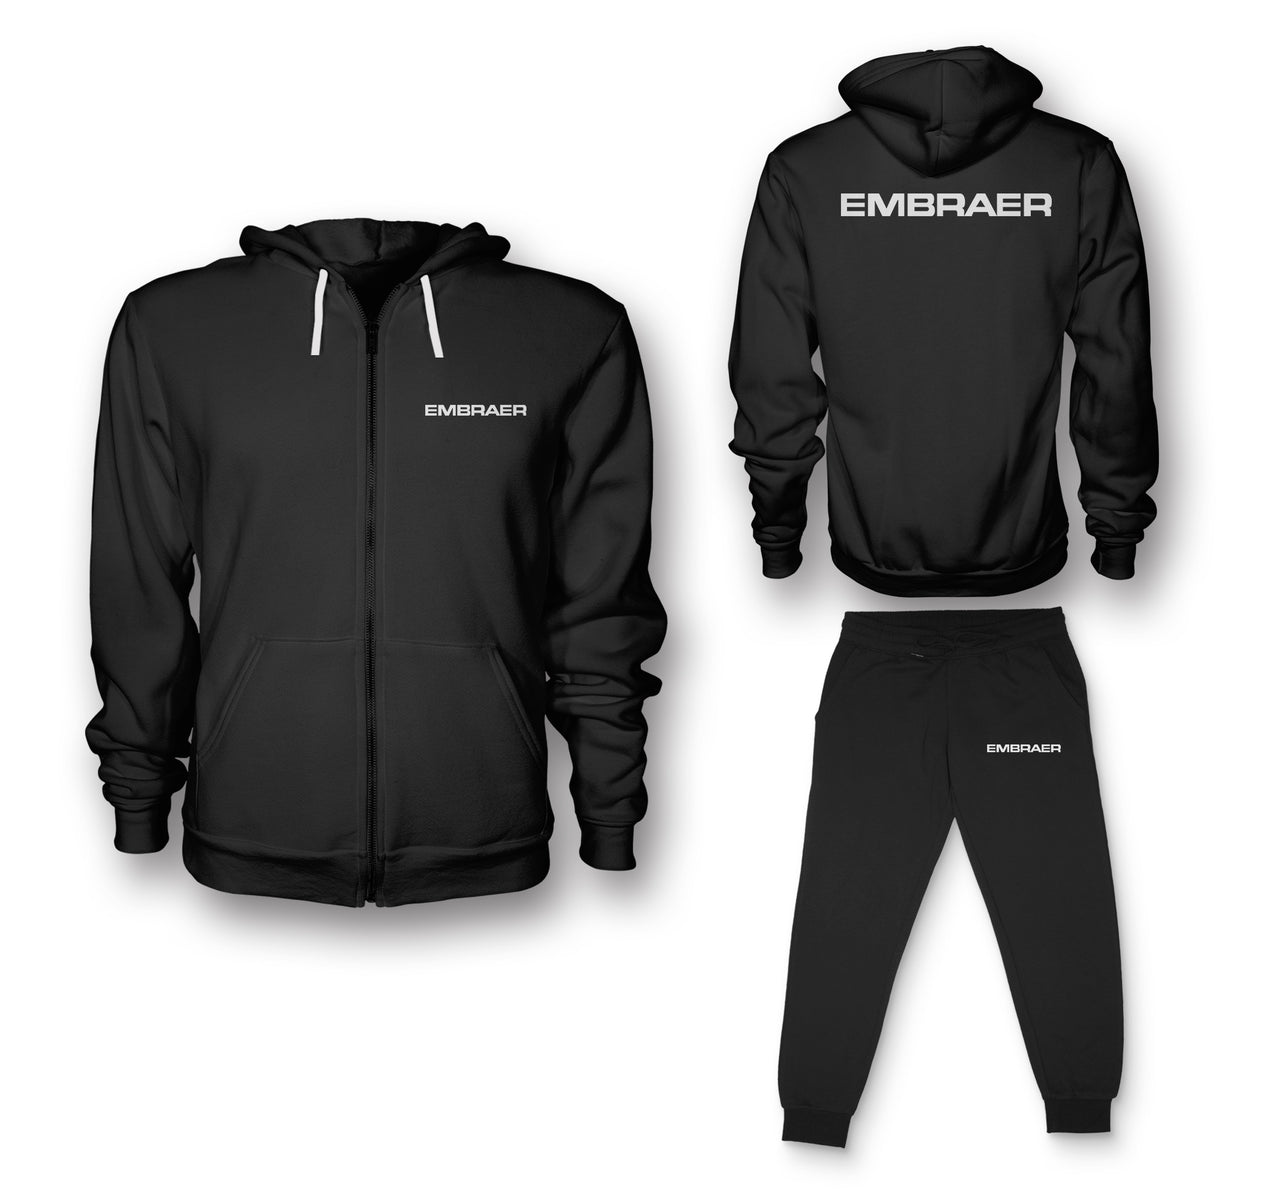 Embraer & Text Designed Zipped Hoodies & Sweatpants Set